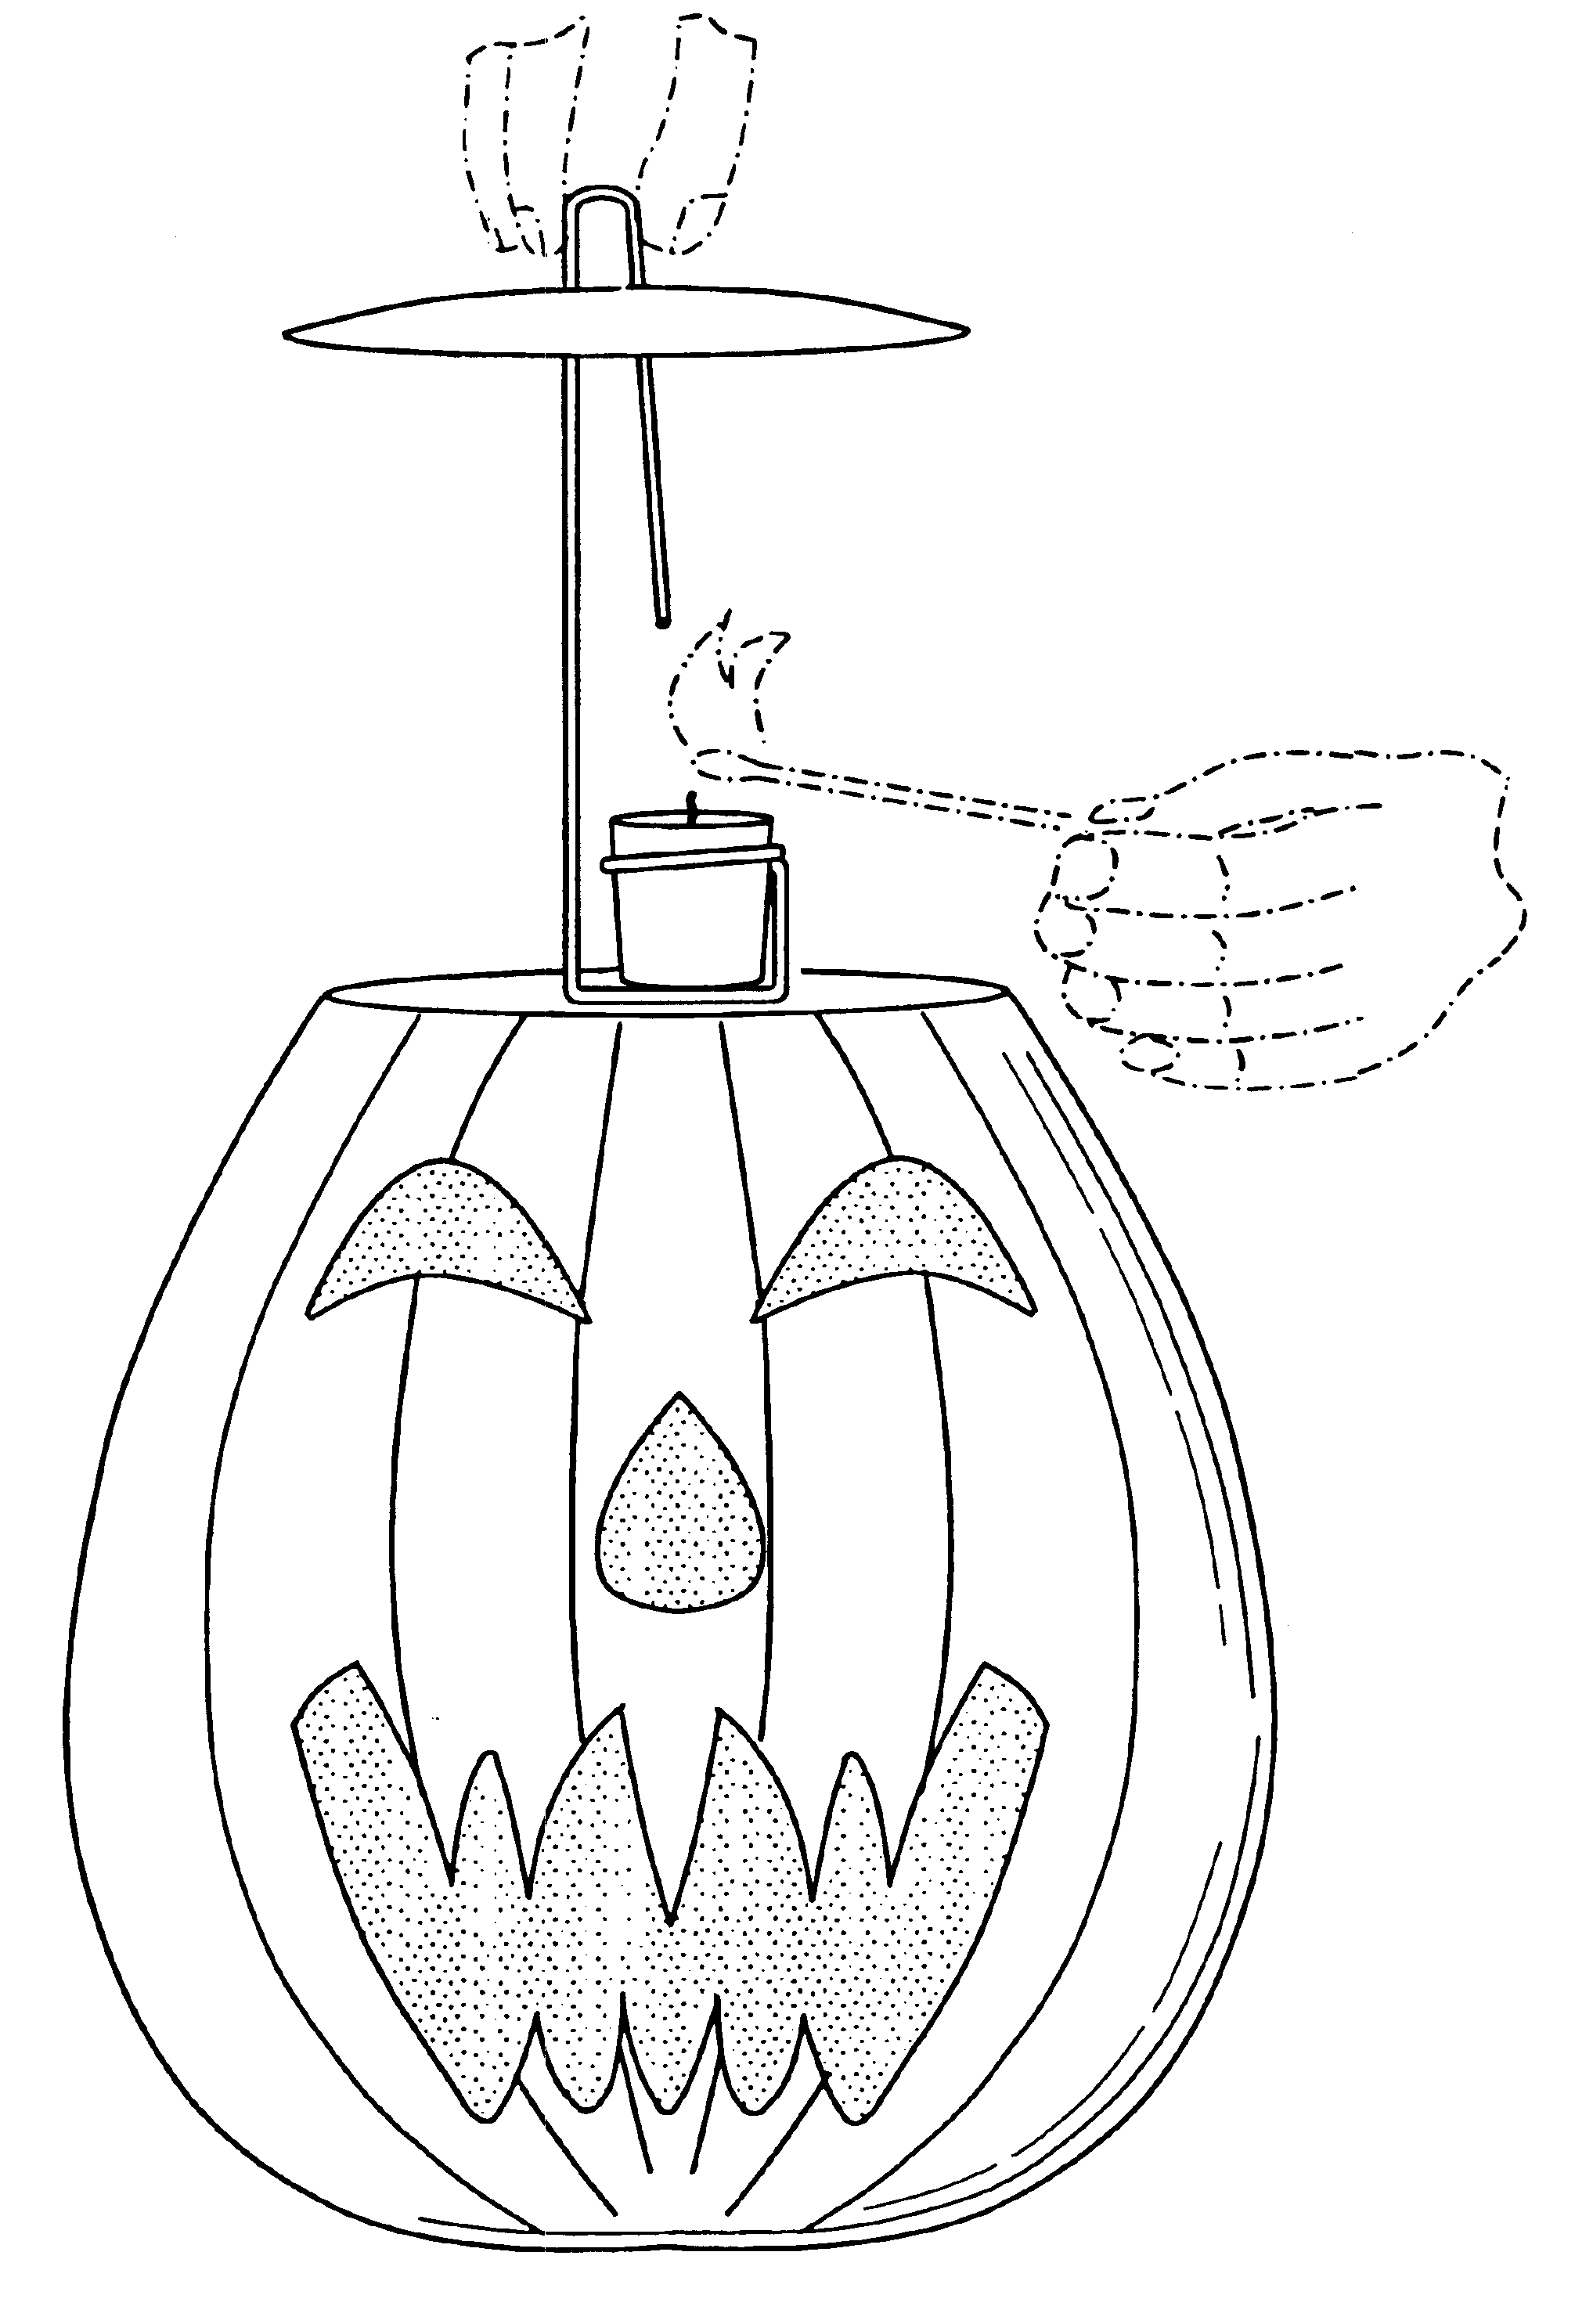 Candle holder for jack-o-lantern lid and method of applying the same